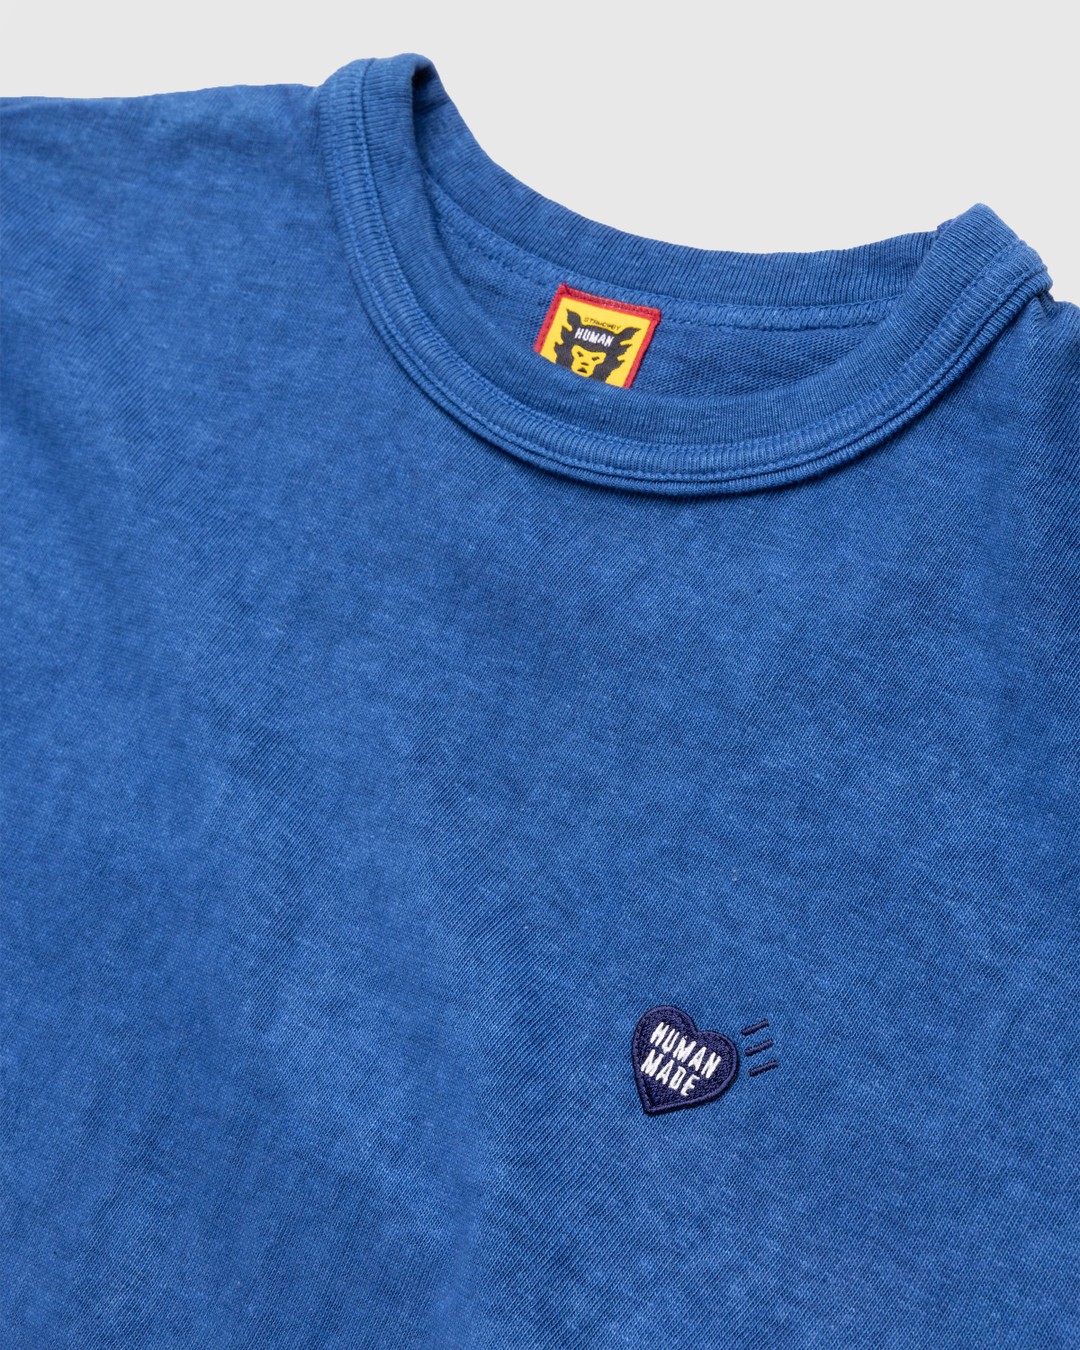 Human Made – Ningen-sei Indigo Dyed T-Shirt #2 Blue | Highsnobiety